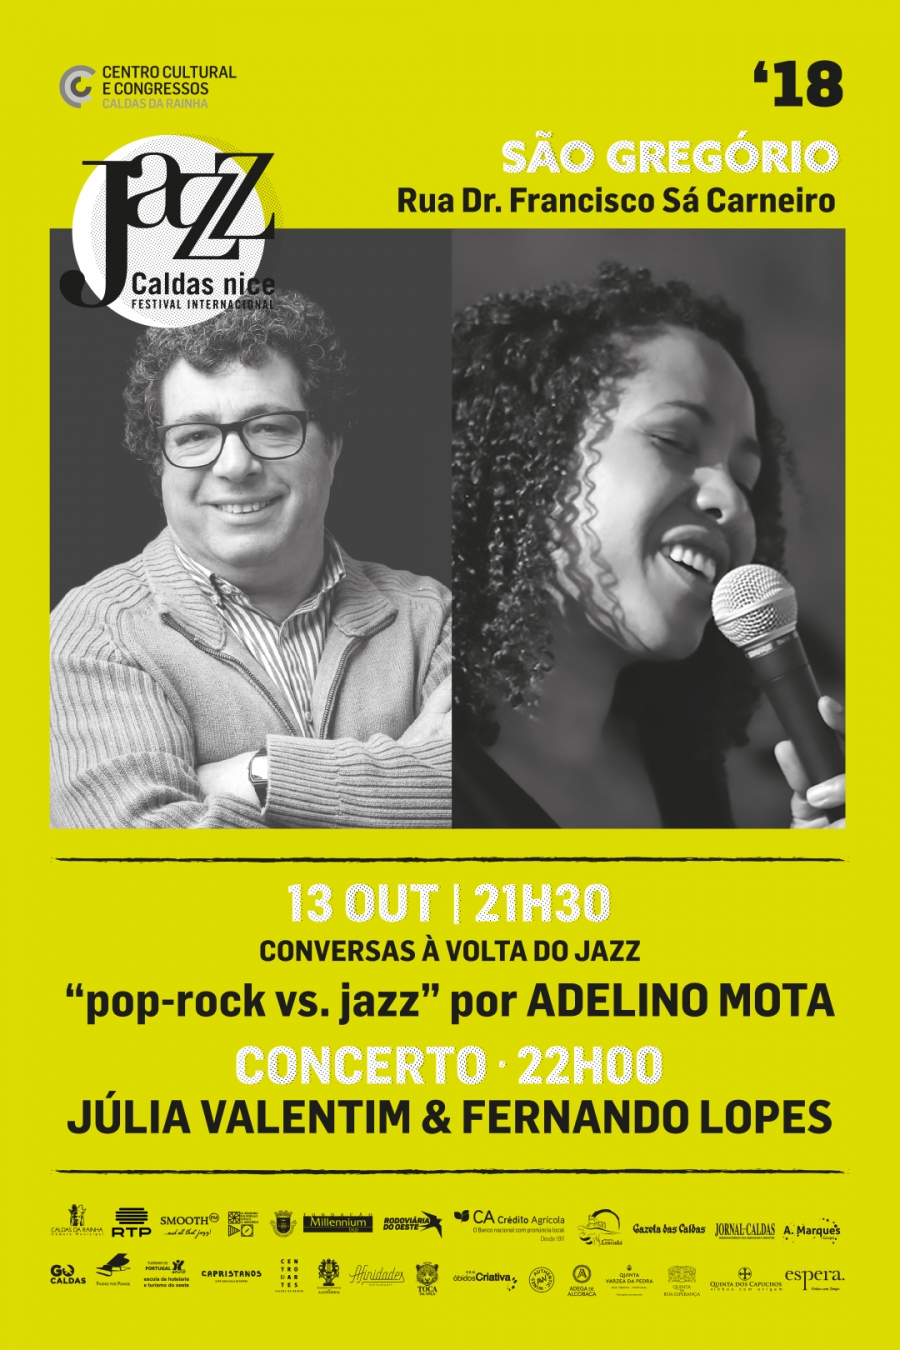 Conversas à volta do Jazz... “POP-ROCK VS. JAZZ” por Adelino Mota